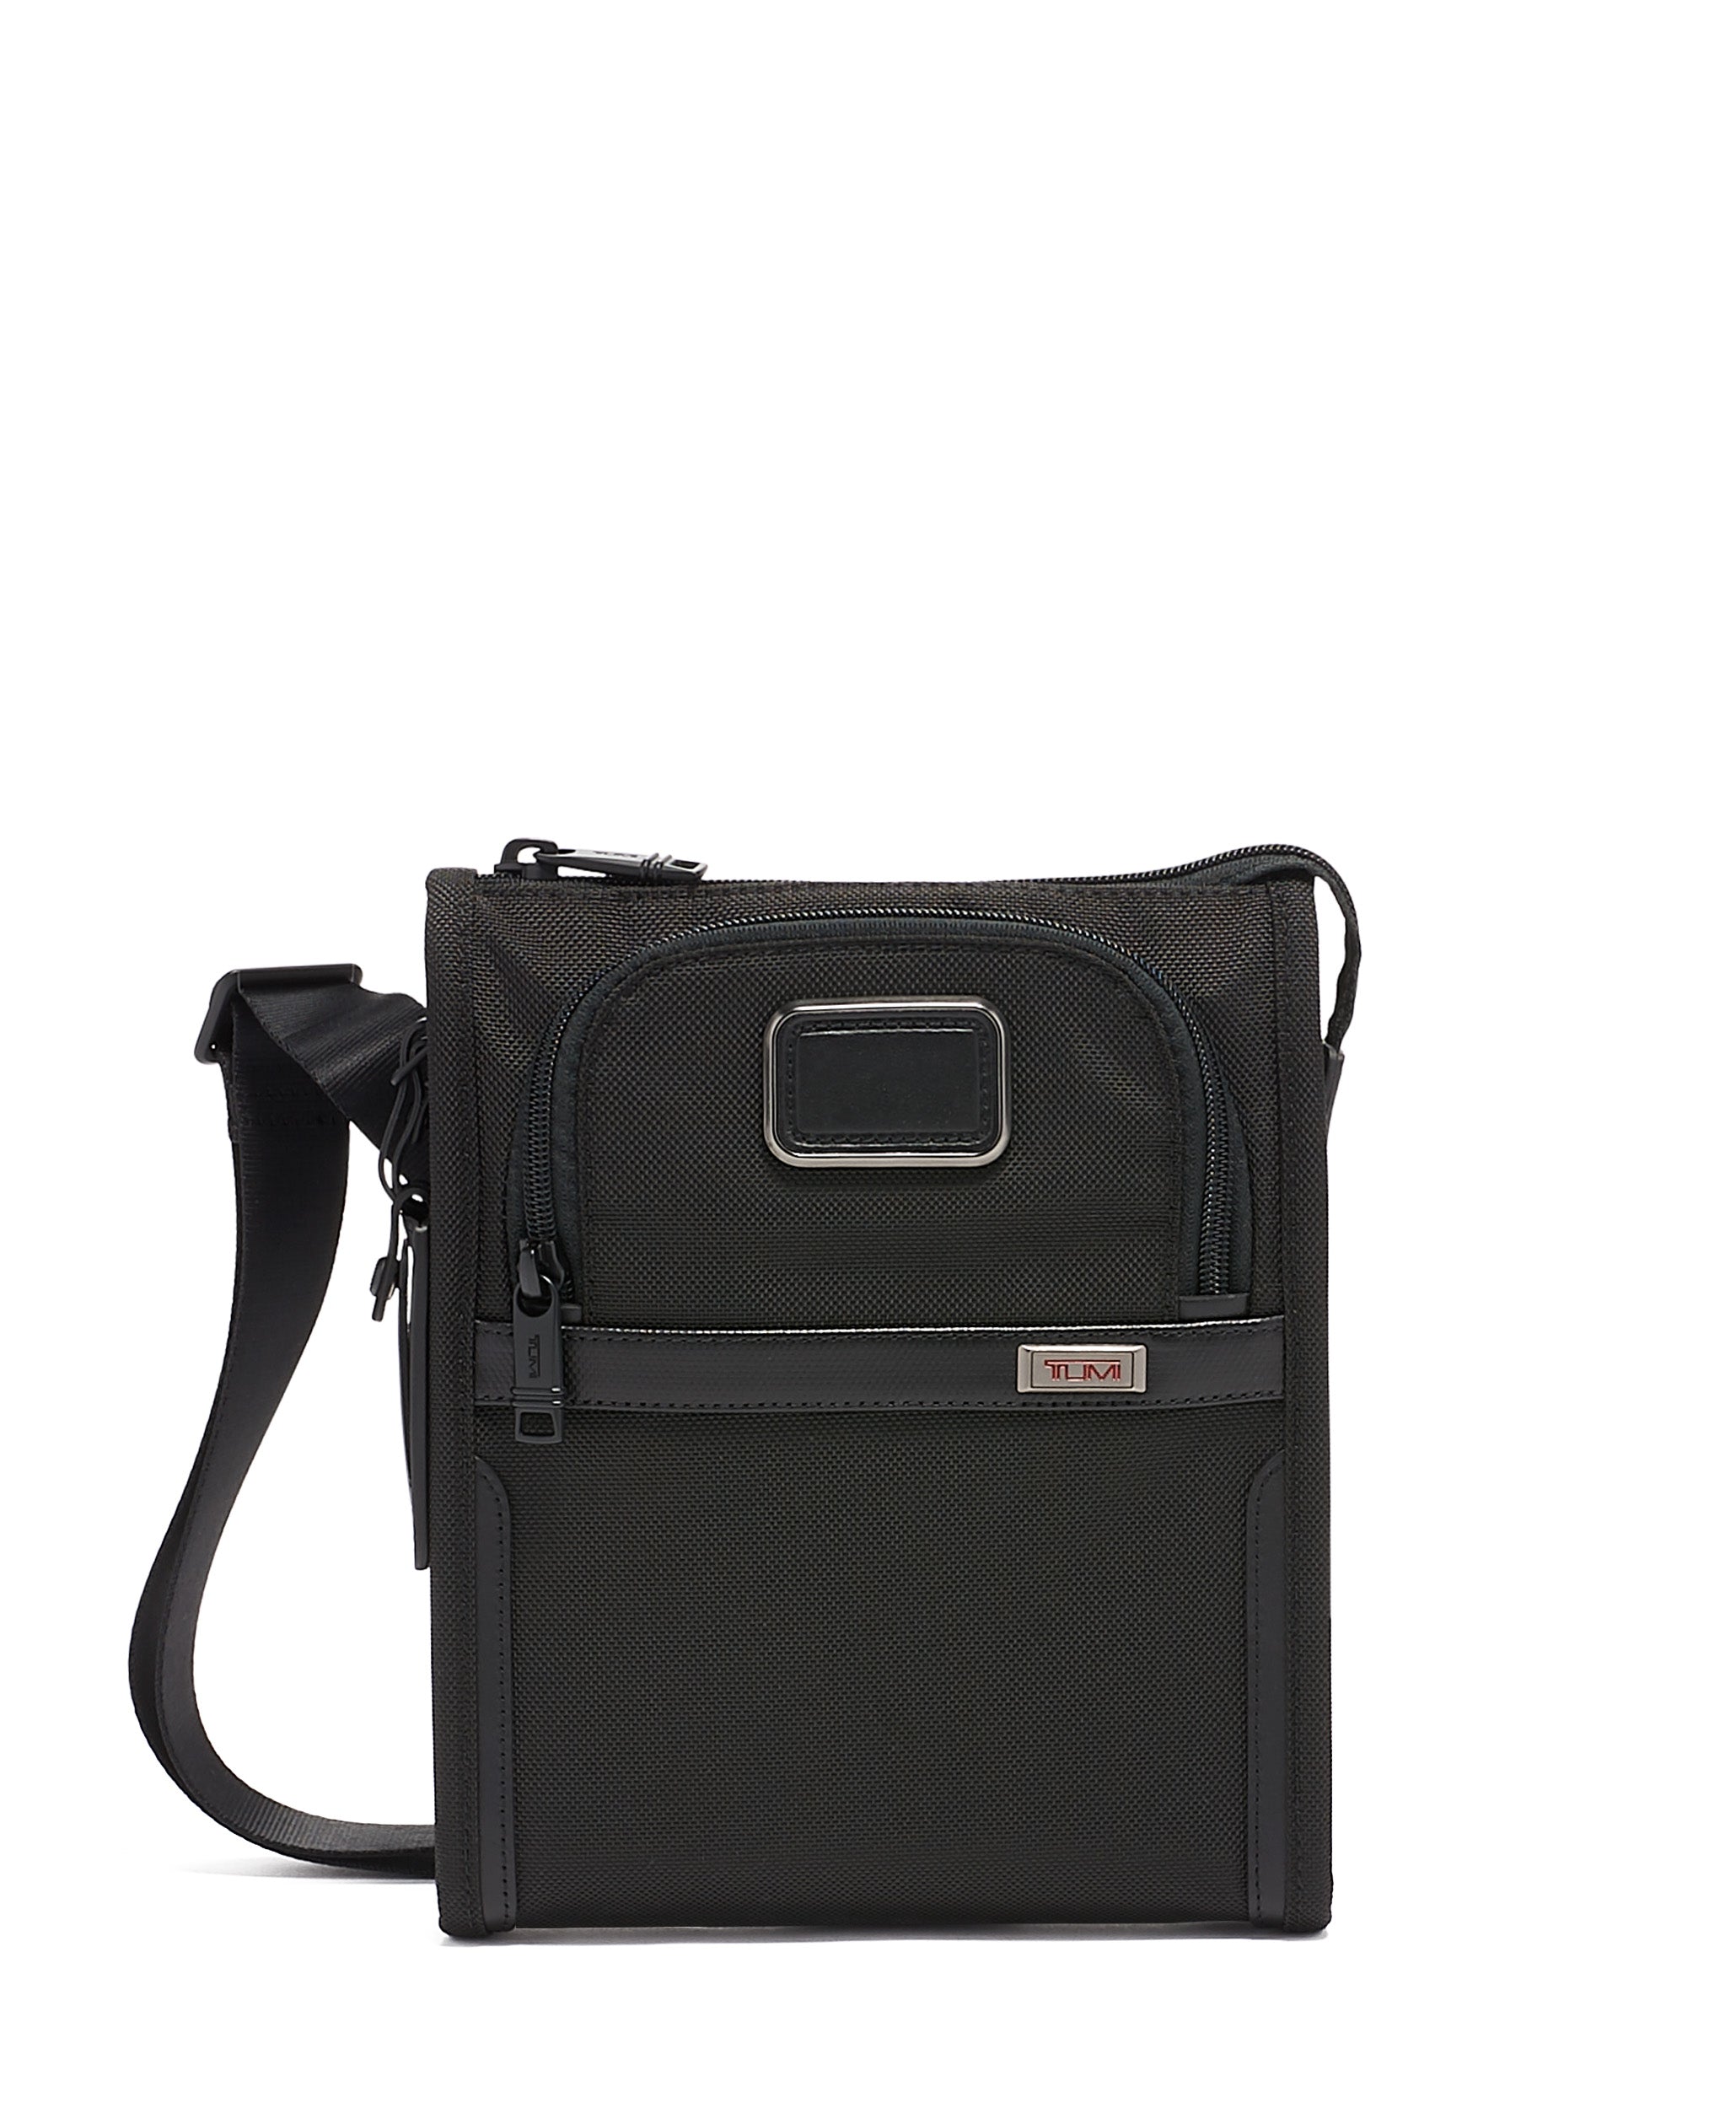 TUMI for Delta Gray Nylon Zippered Pouch Small Travel Toiletry Cosmetic Bag  | eBay